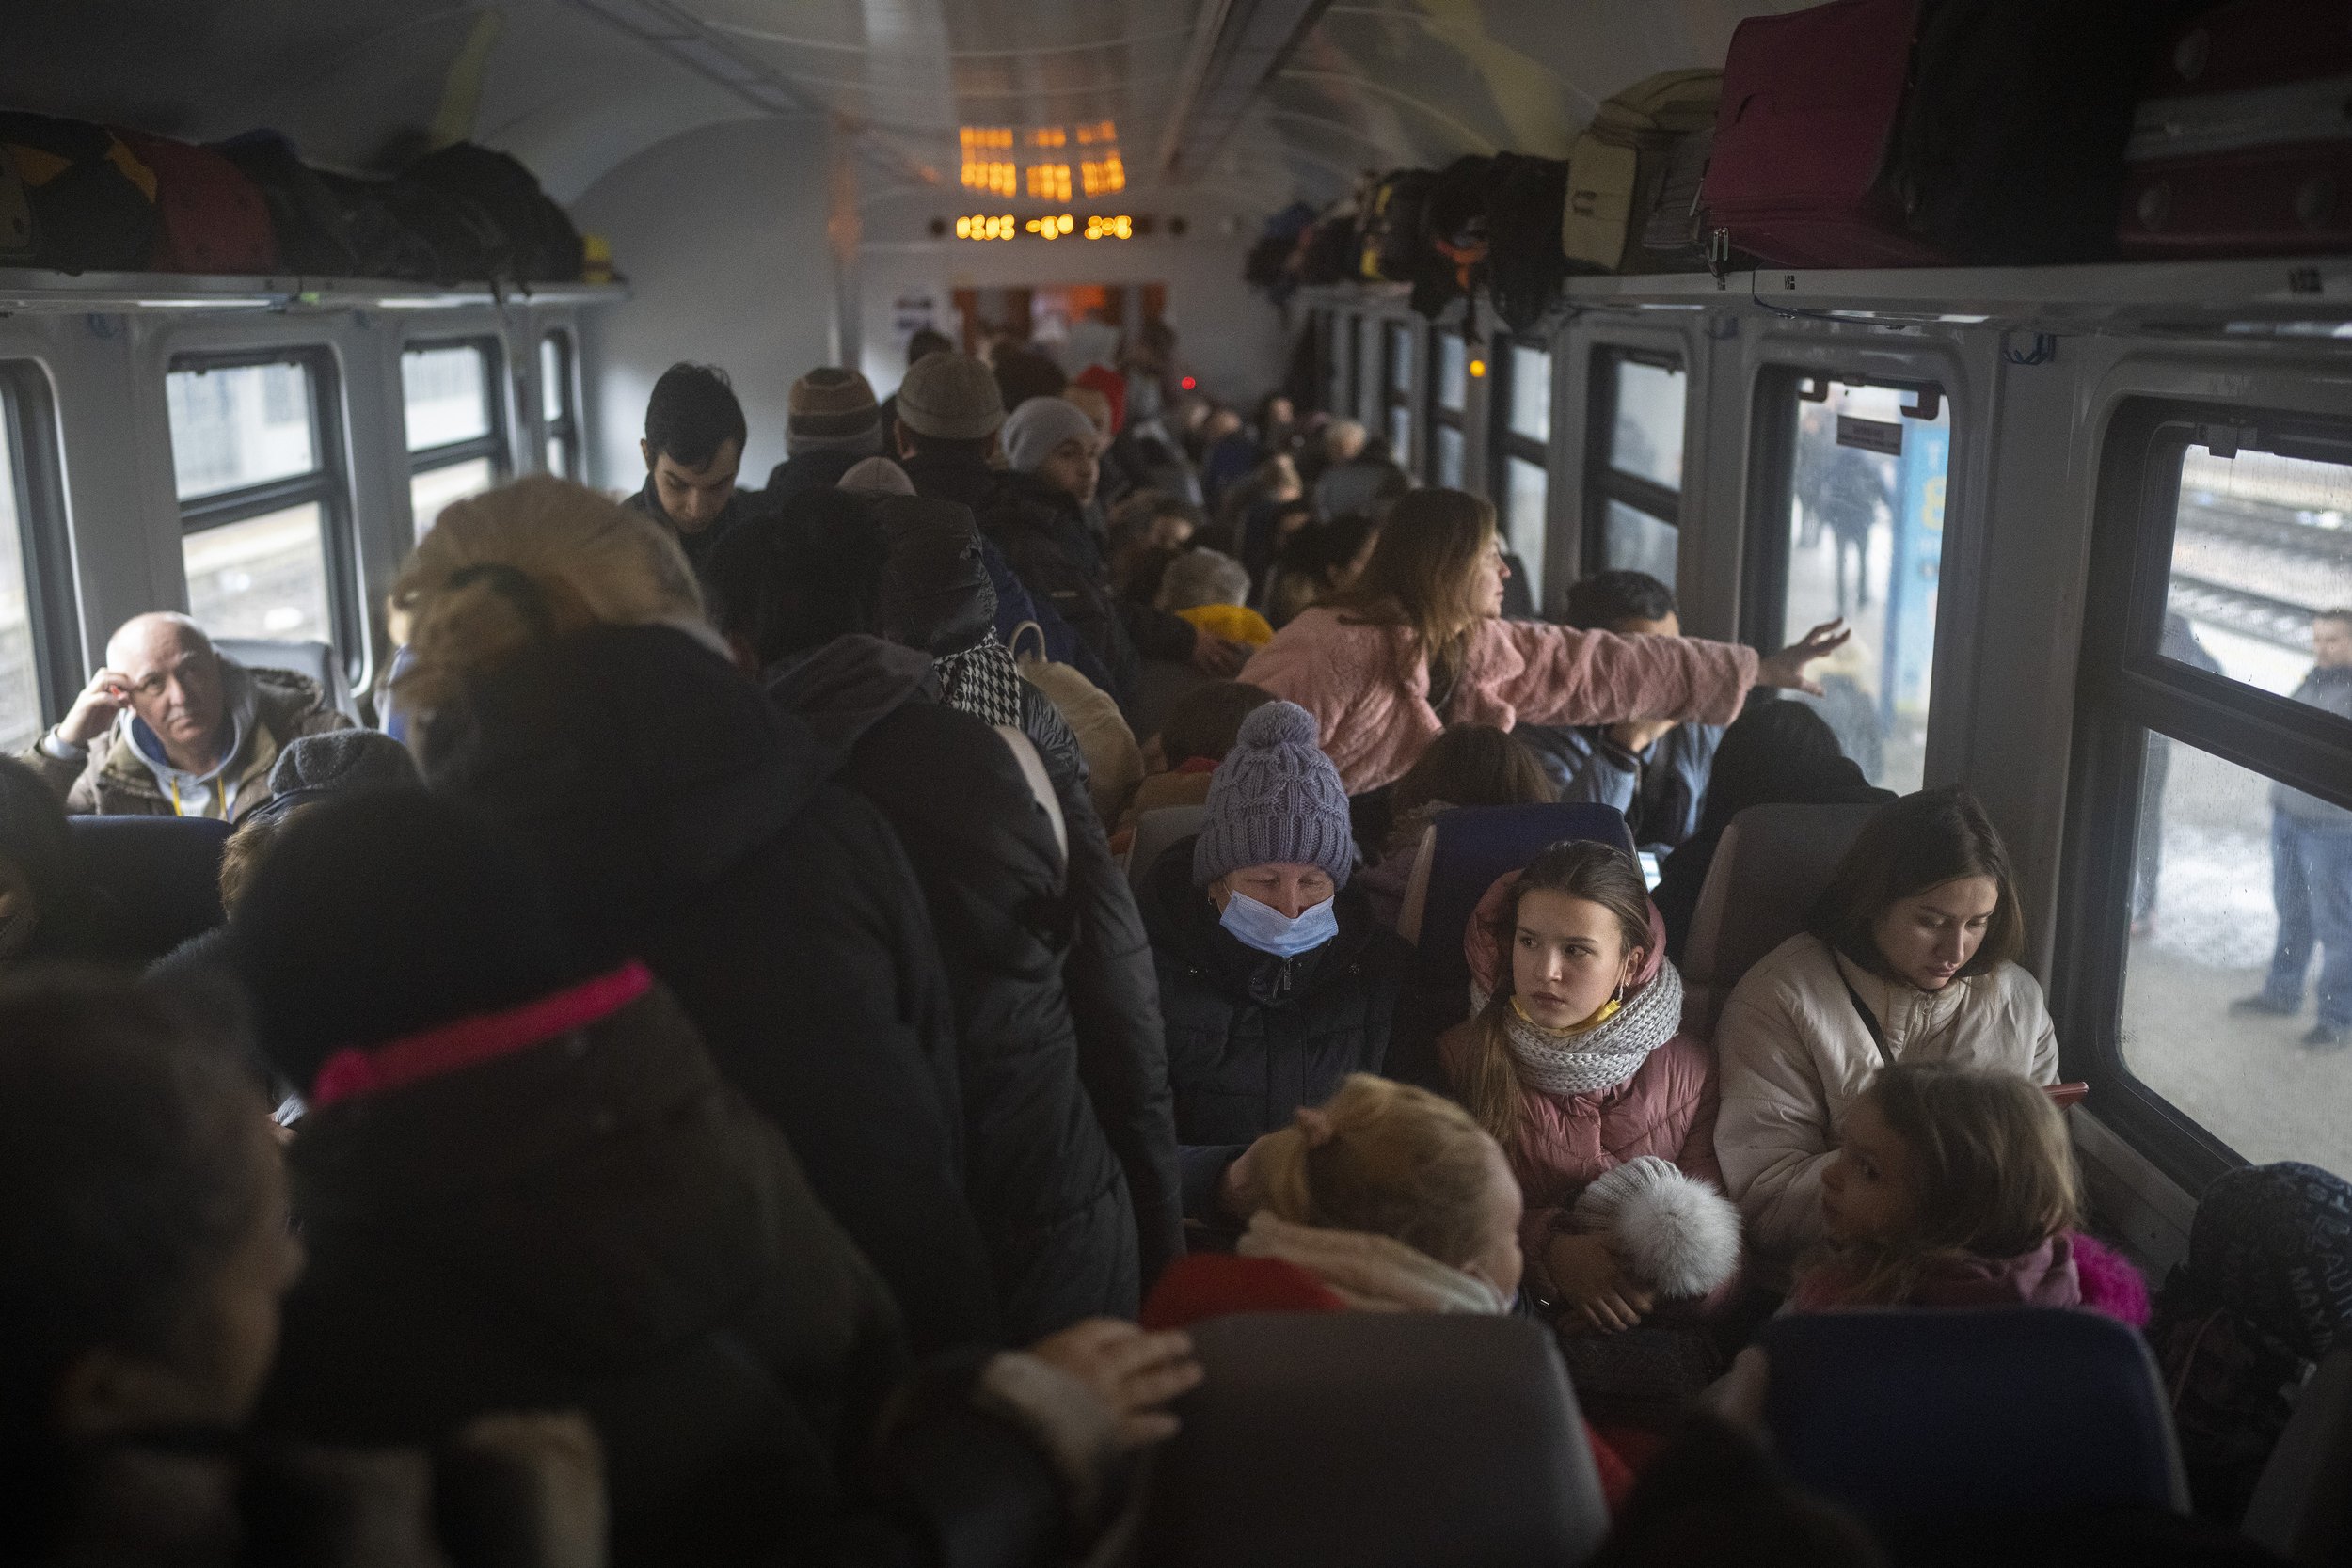  Women and children crowd a train bound for Lviv at the Kyiv station, Ukraine, Thursday, March 3. 2022. (AP Photo/Emilio Morenatti) 